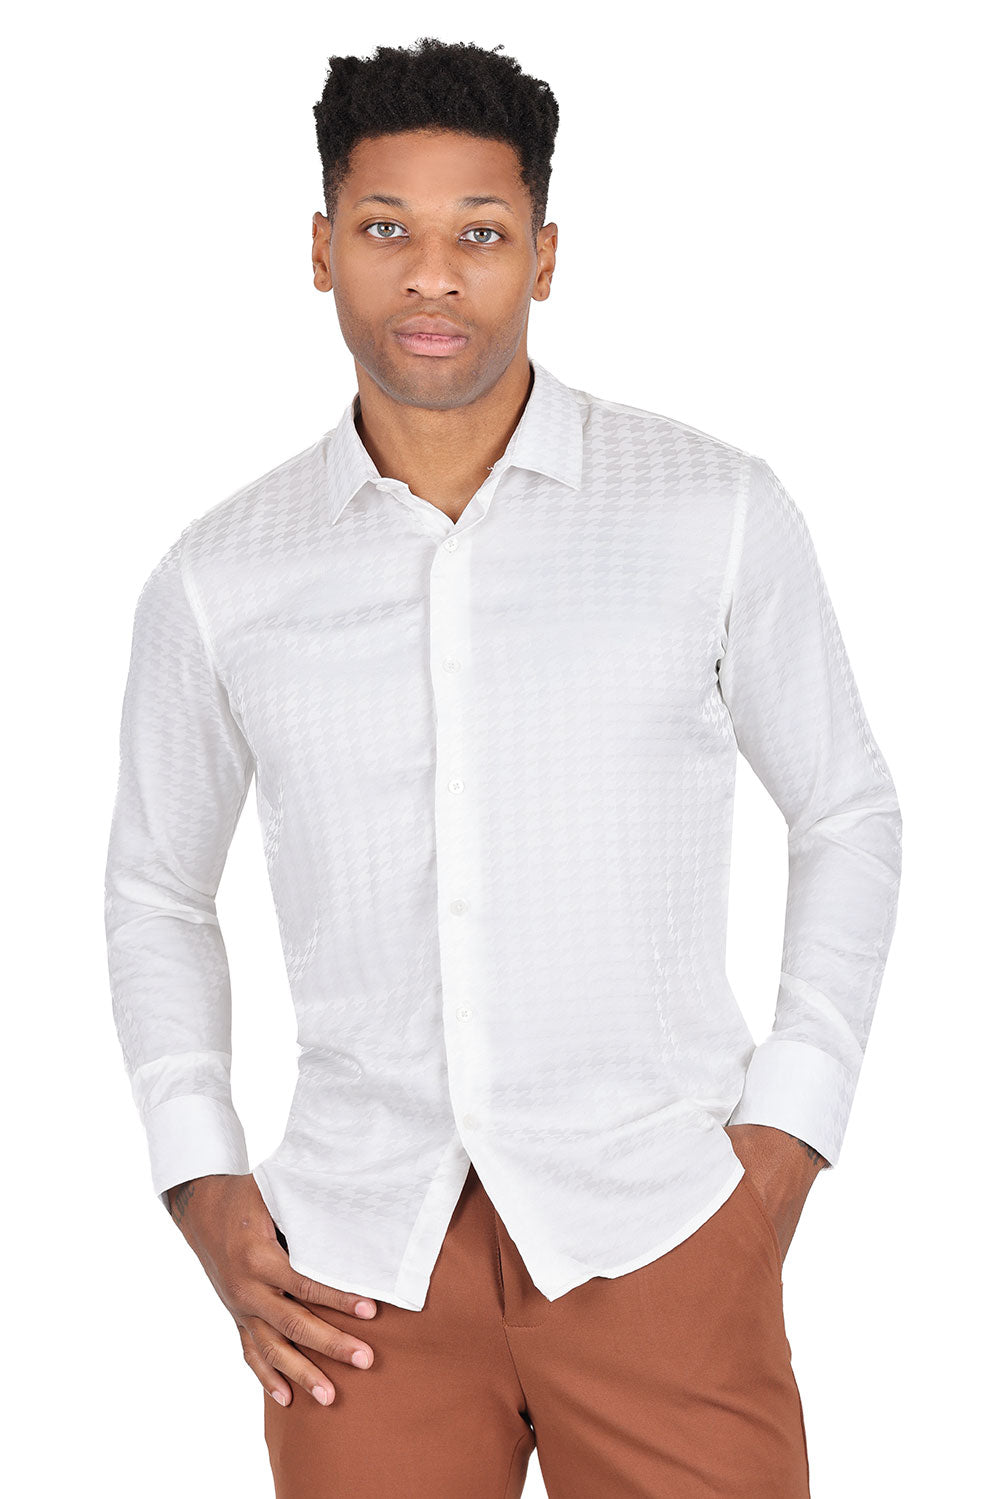 BARABAS Men's Wood Art Long Sleeve Button Down Shirt 2B321 White